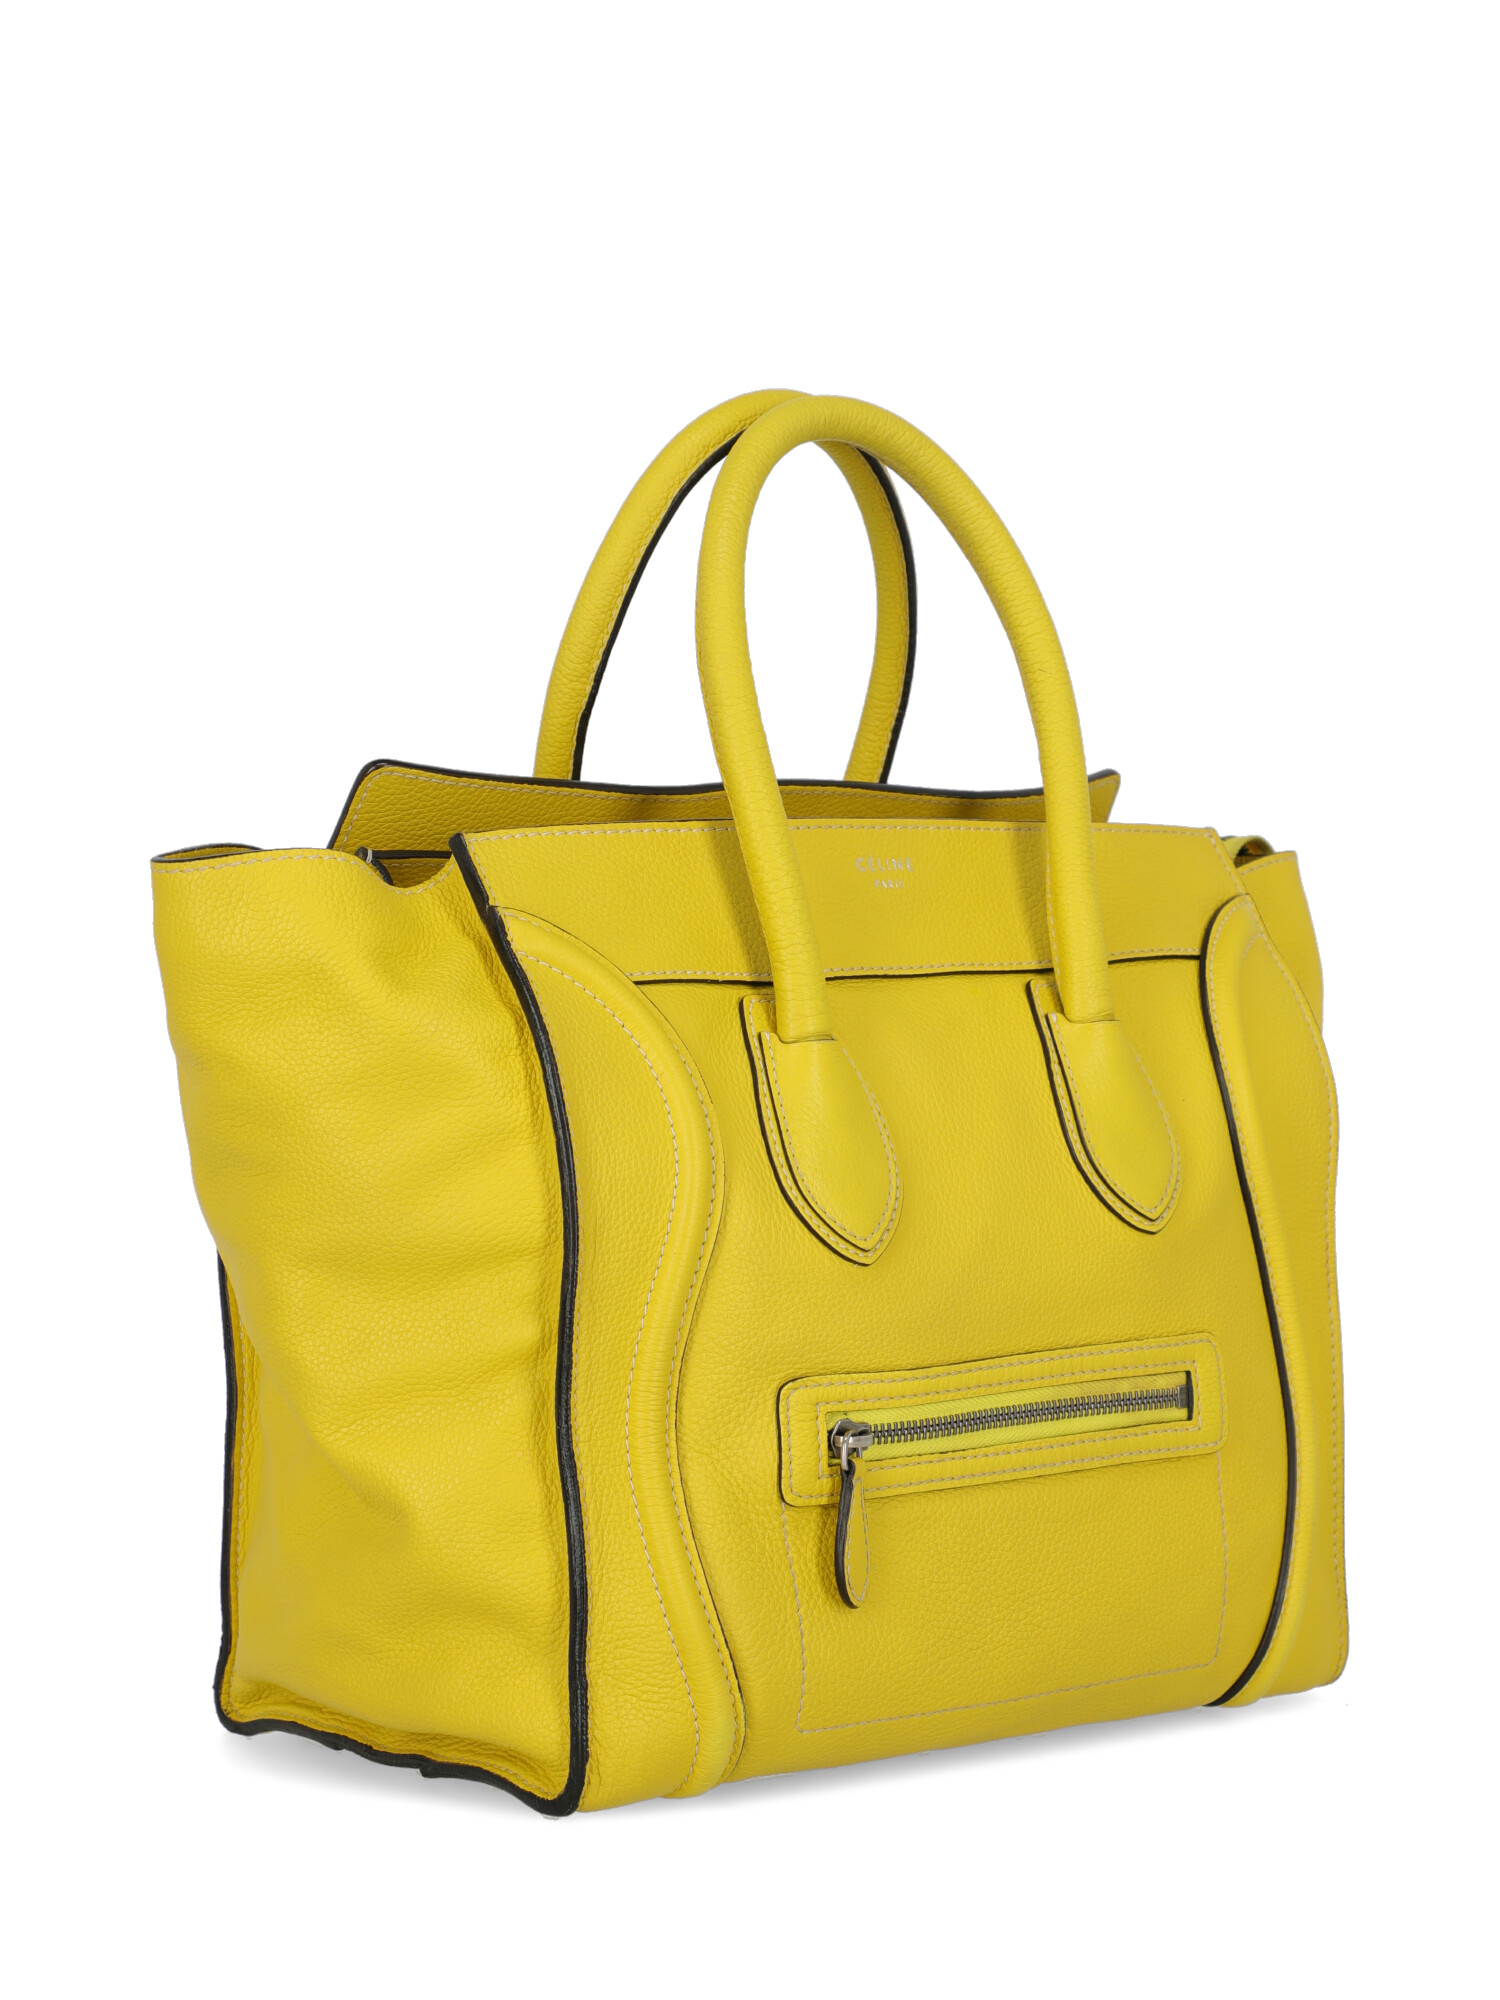 Celine Special Price Women Handbags Luggage Yellow | eBay